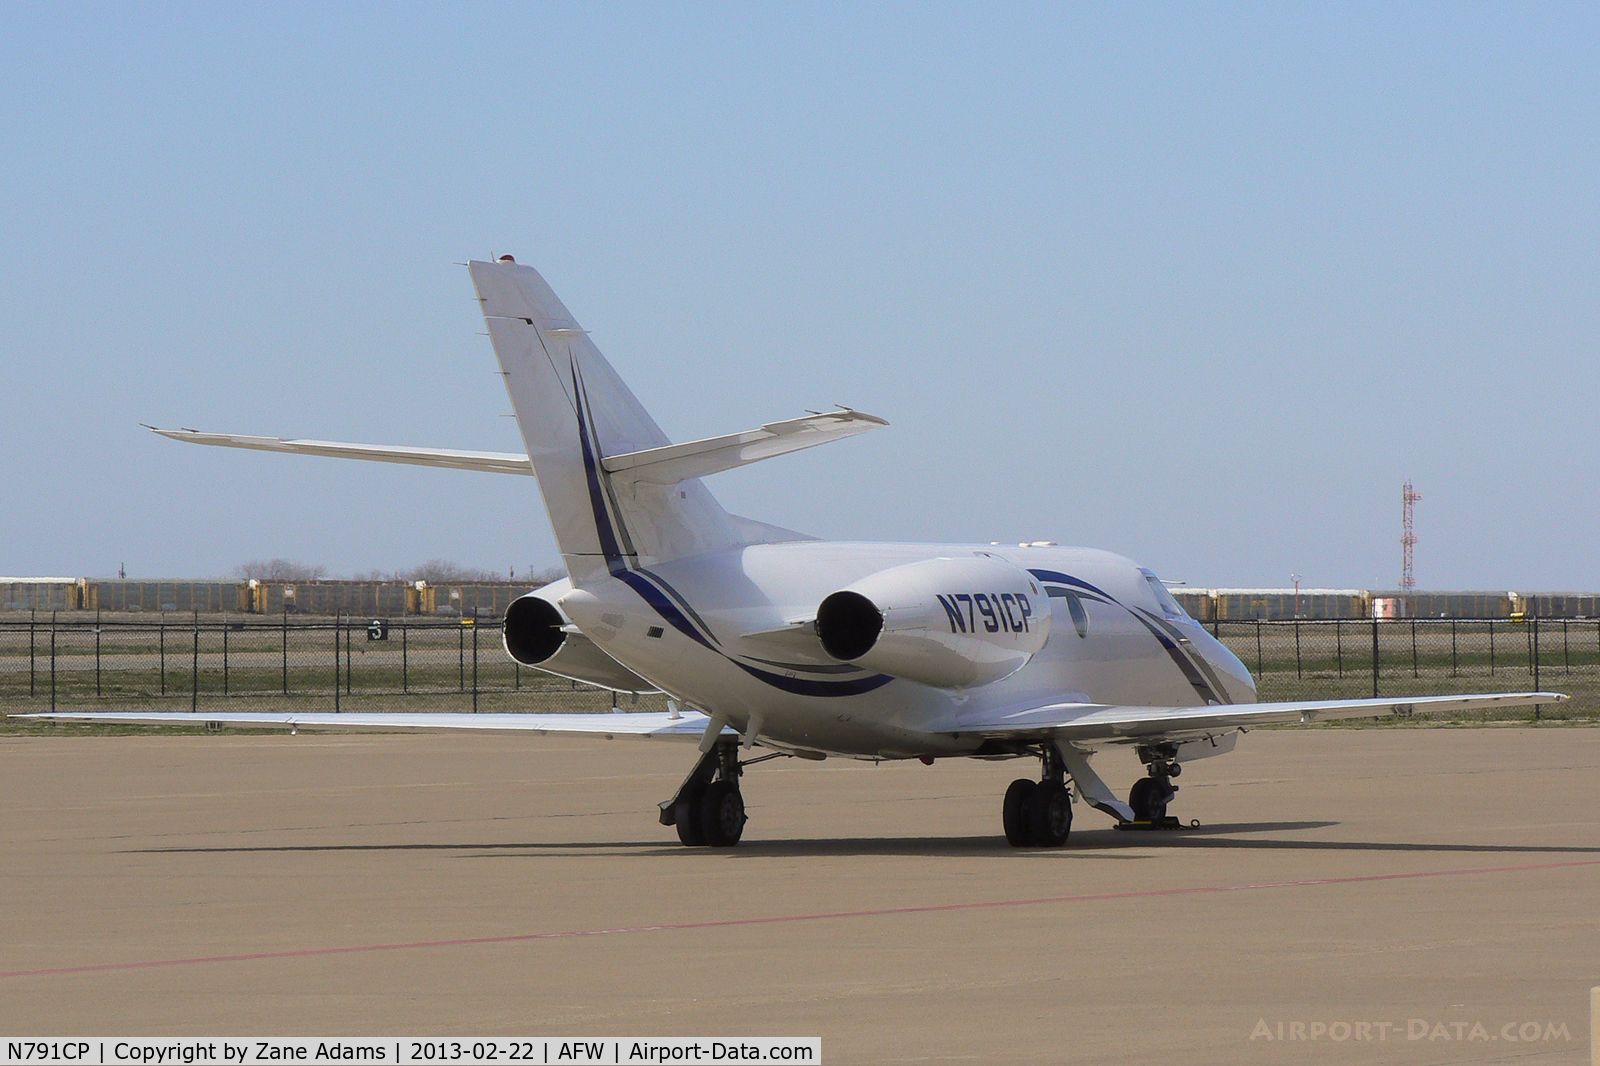 N791CP, 1975 Dassault Falcon 10 C/N 54, At Alliance Airport - Fort Worth, TX